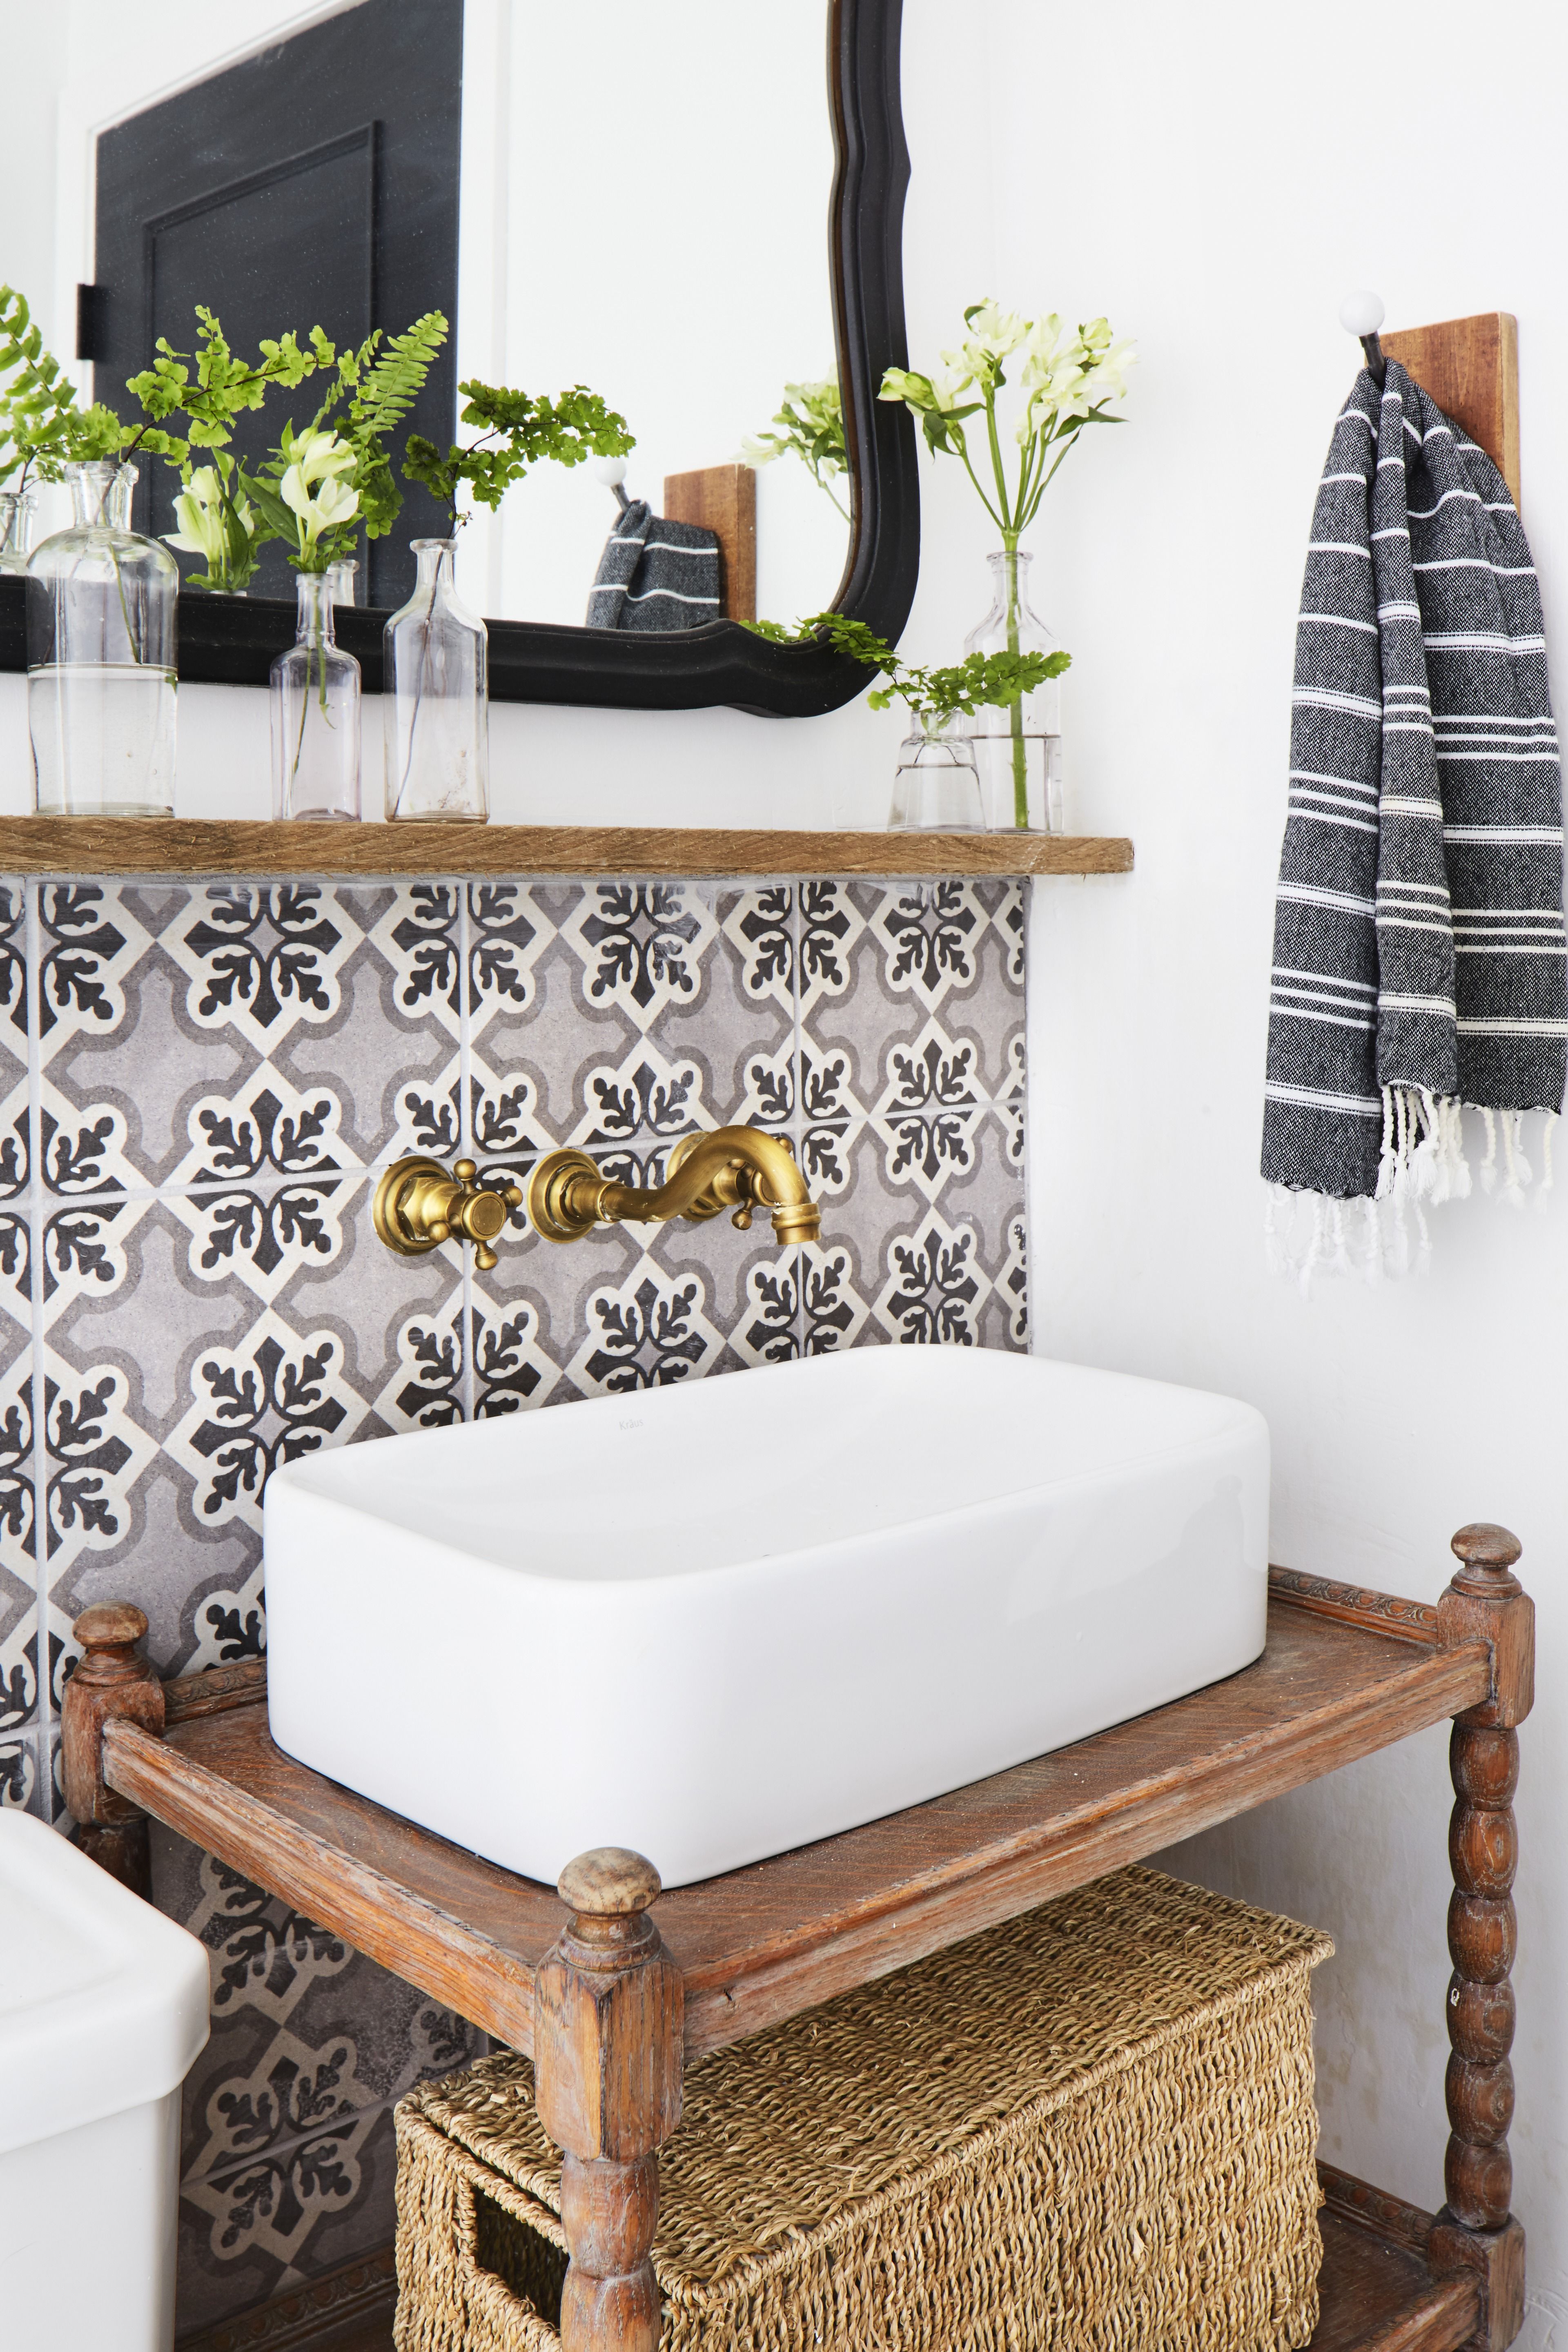 20 Half Bathroom Ideas Decor For Small Spaces - Small Half Bathroom Decorating Ideas